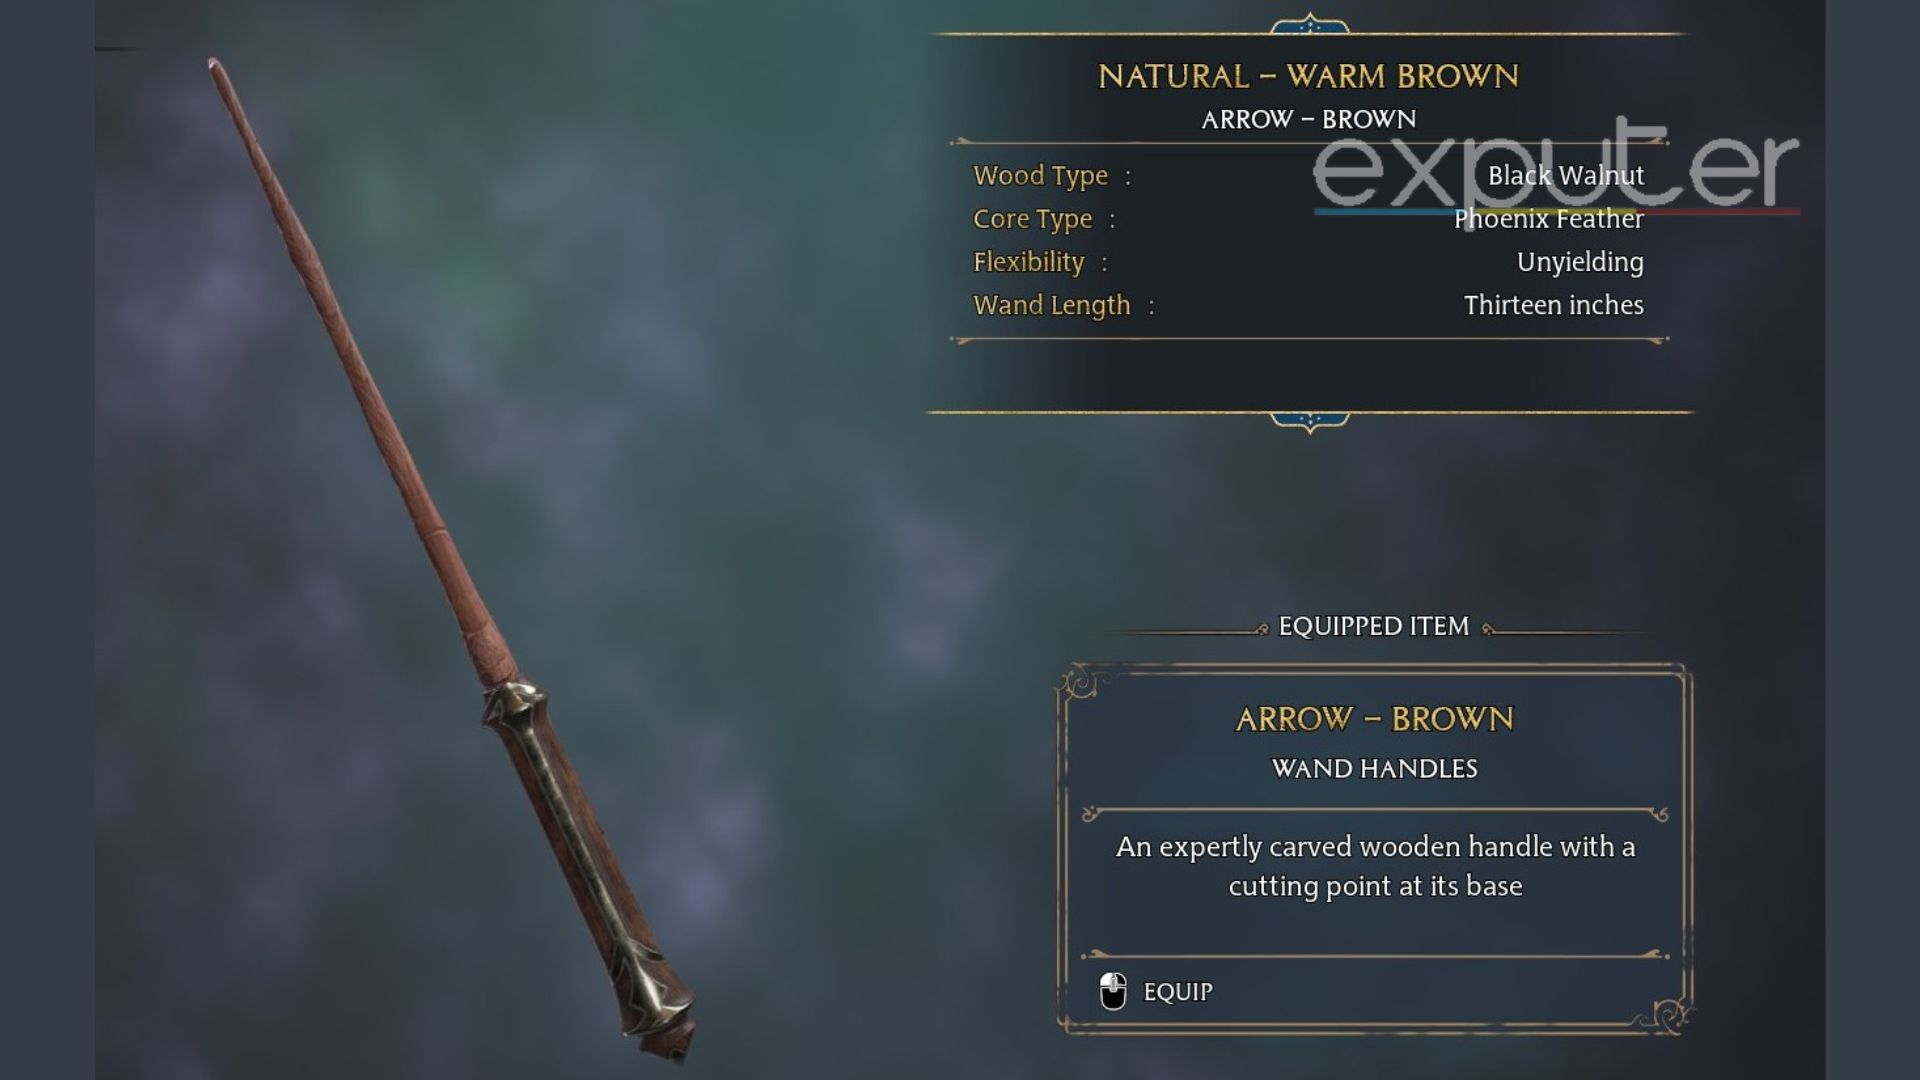 The 'Arrow - Brown' Wand Handle.